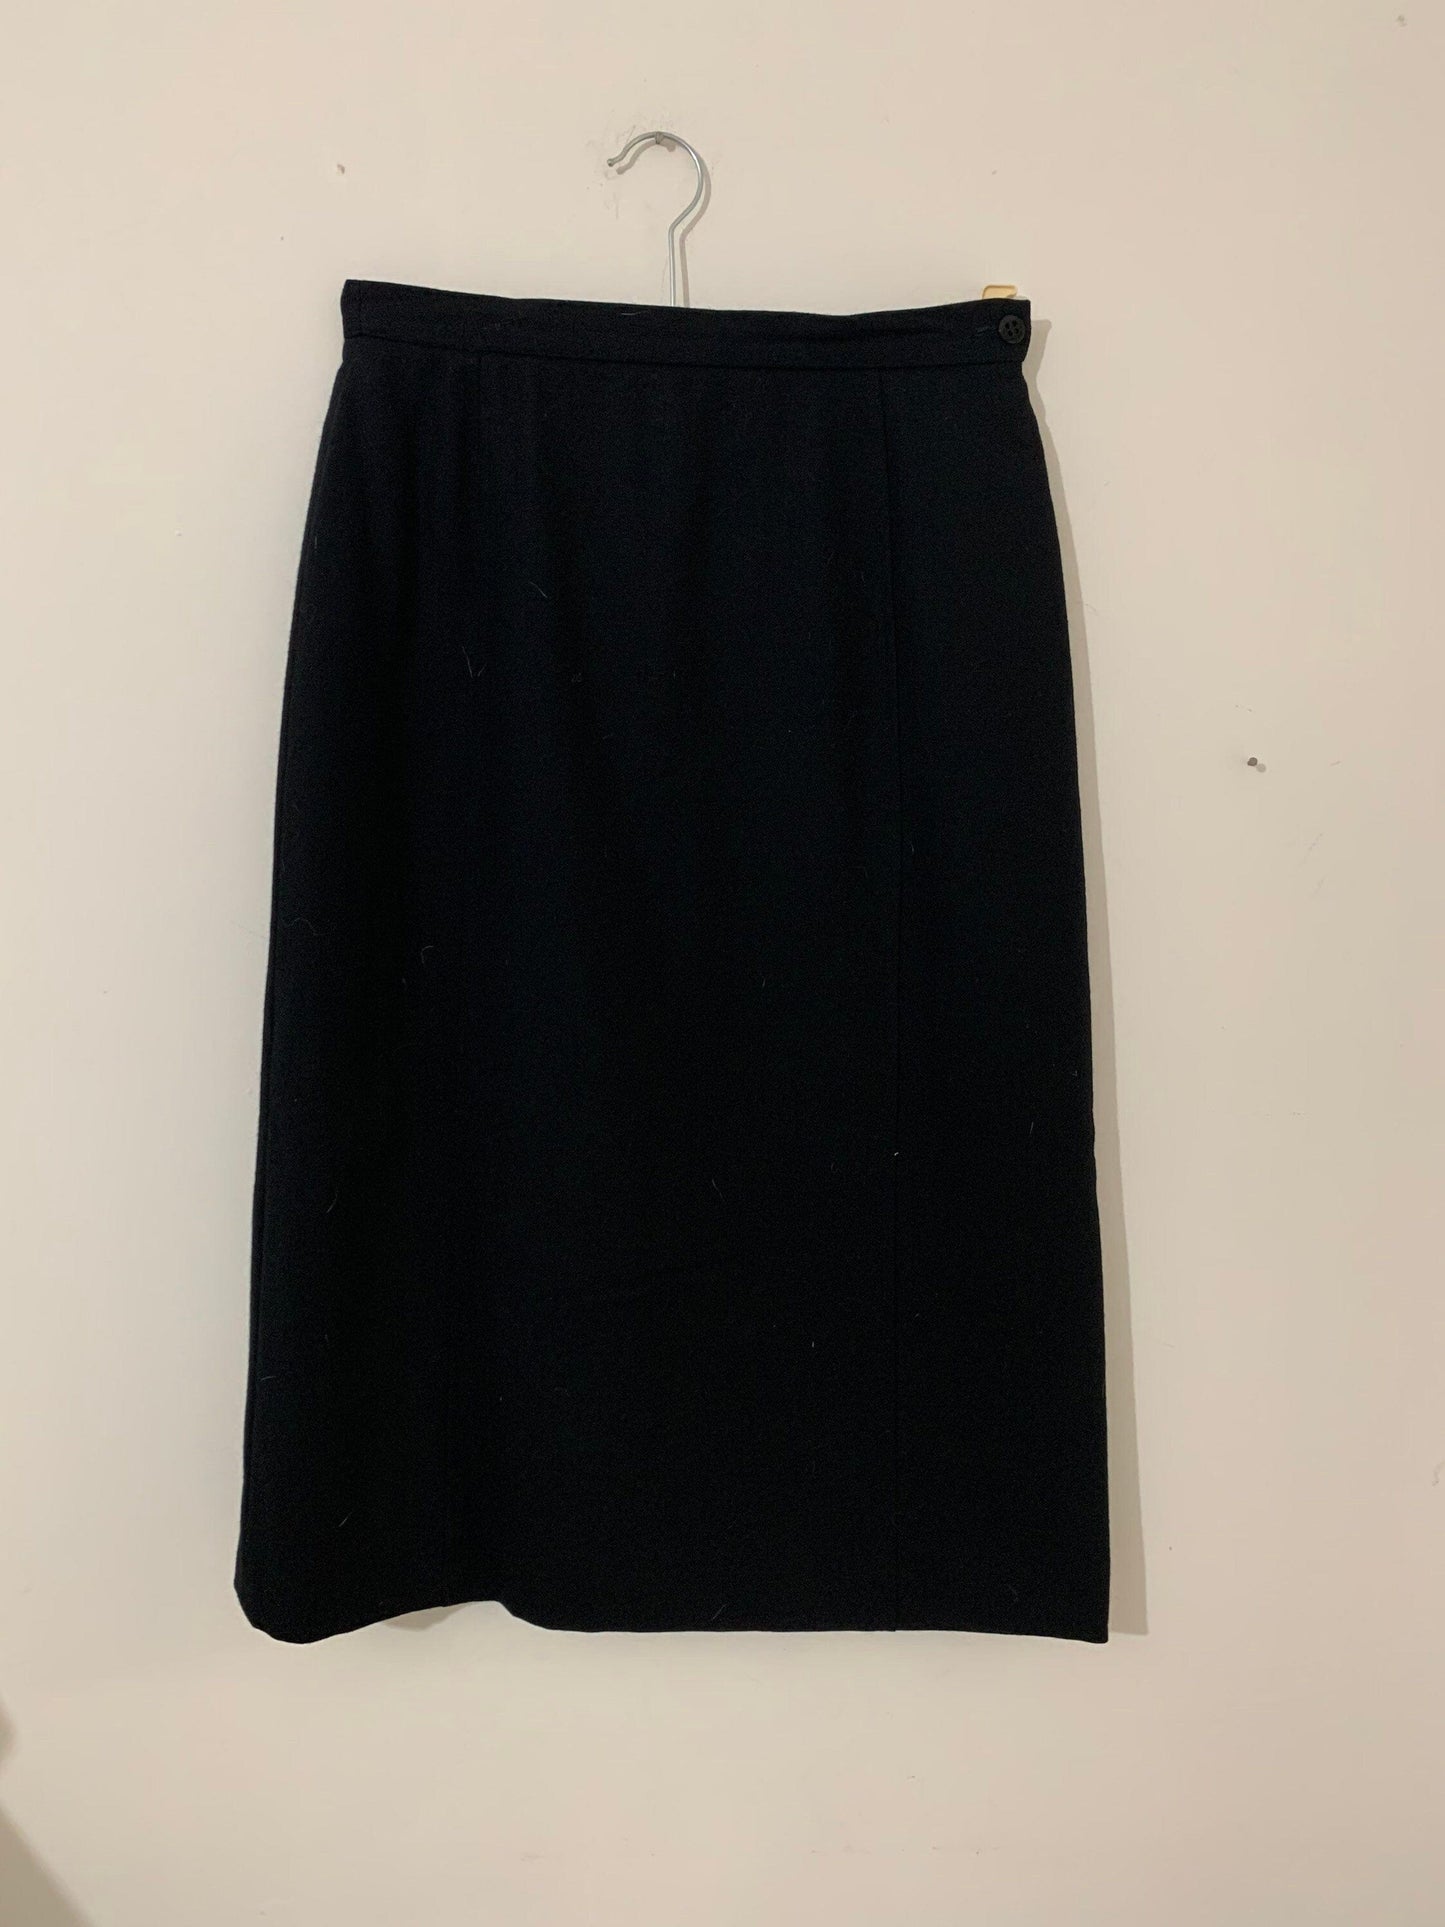 Vintage Jaeger Skirt Midi Length Classic Black pencil Skirt UK 12-14